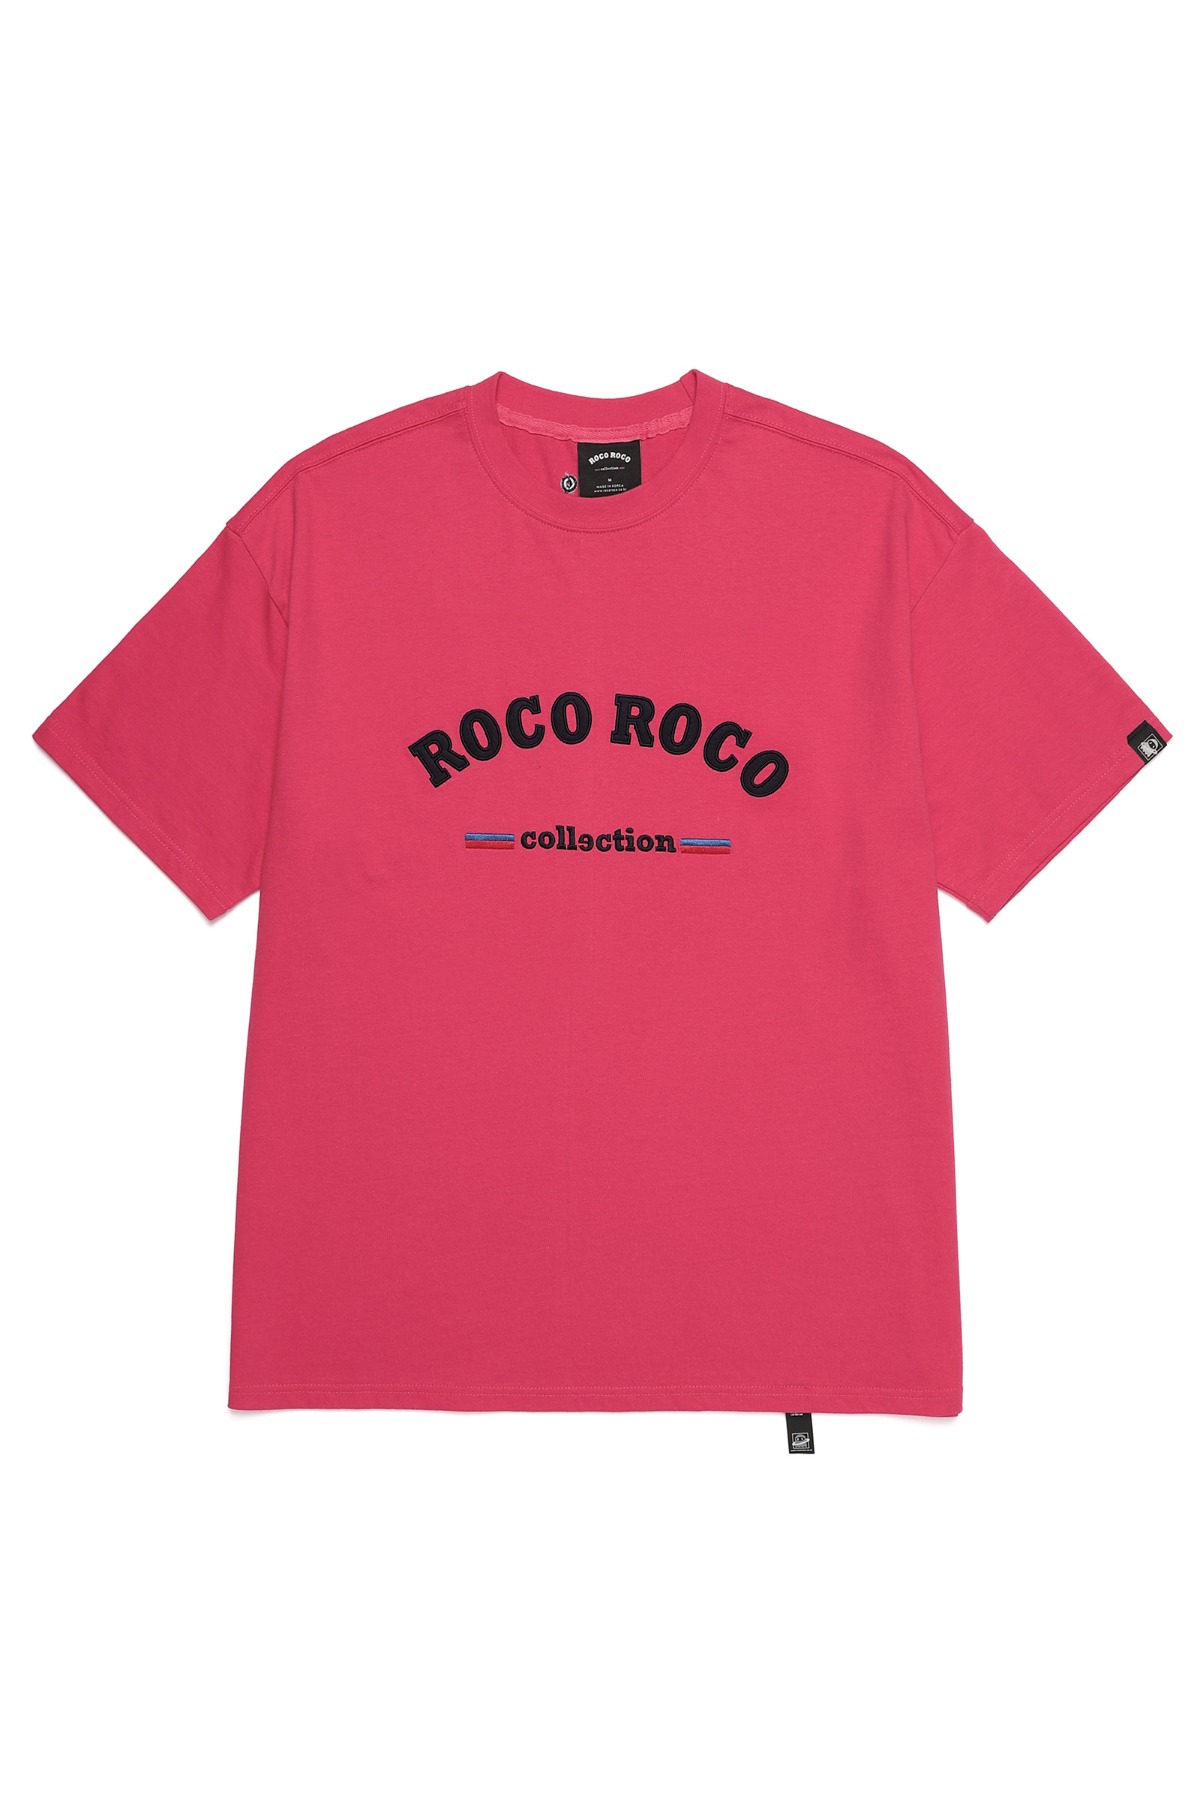 BASIC ROCO T pink